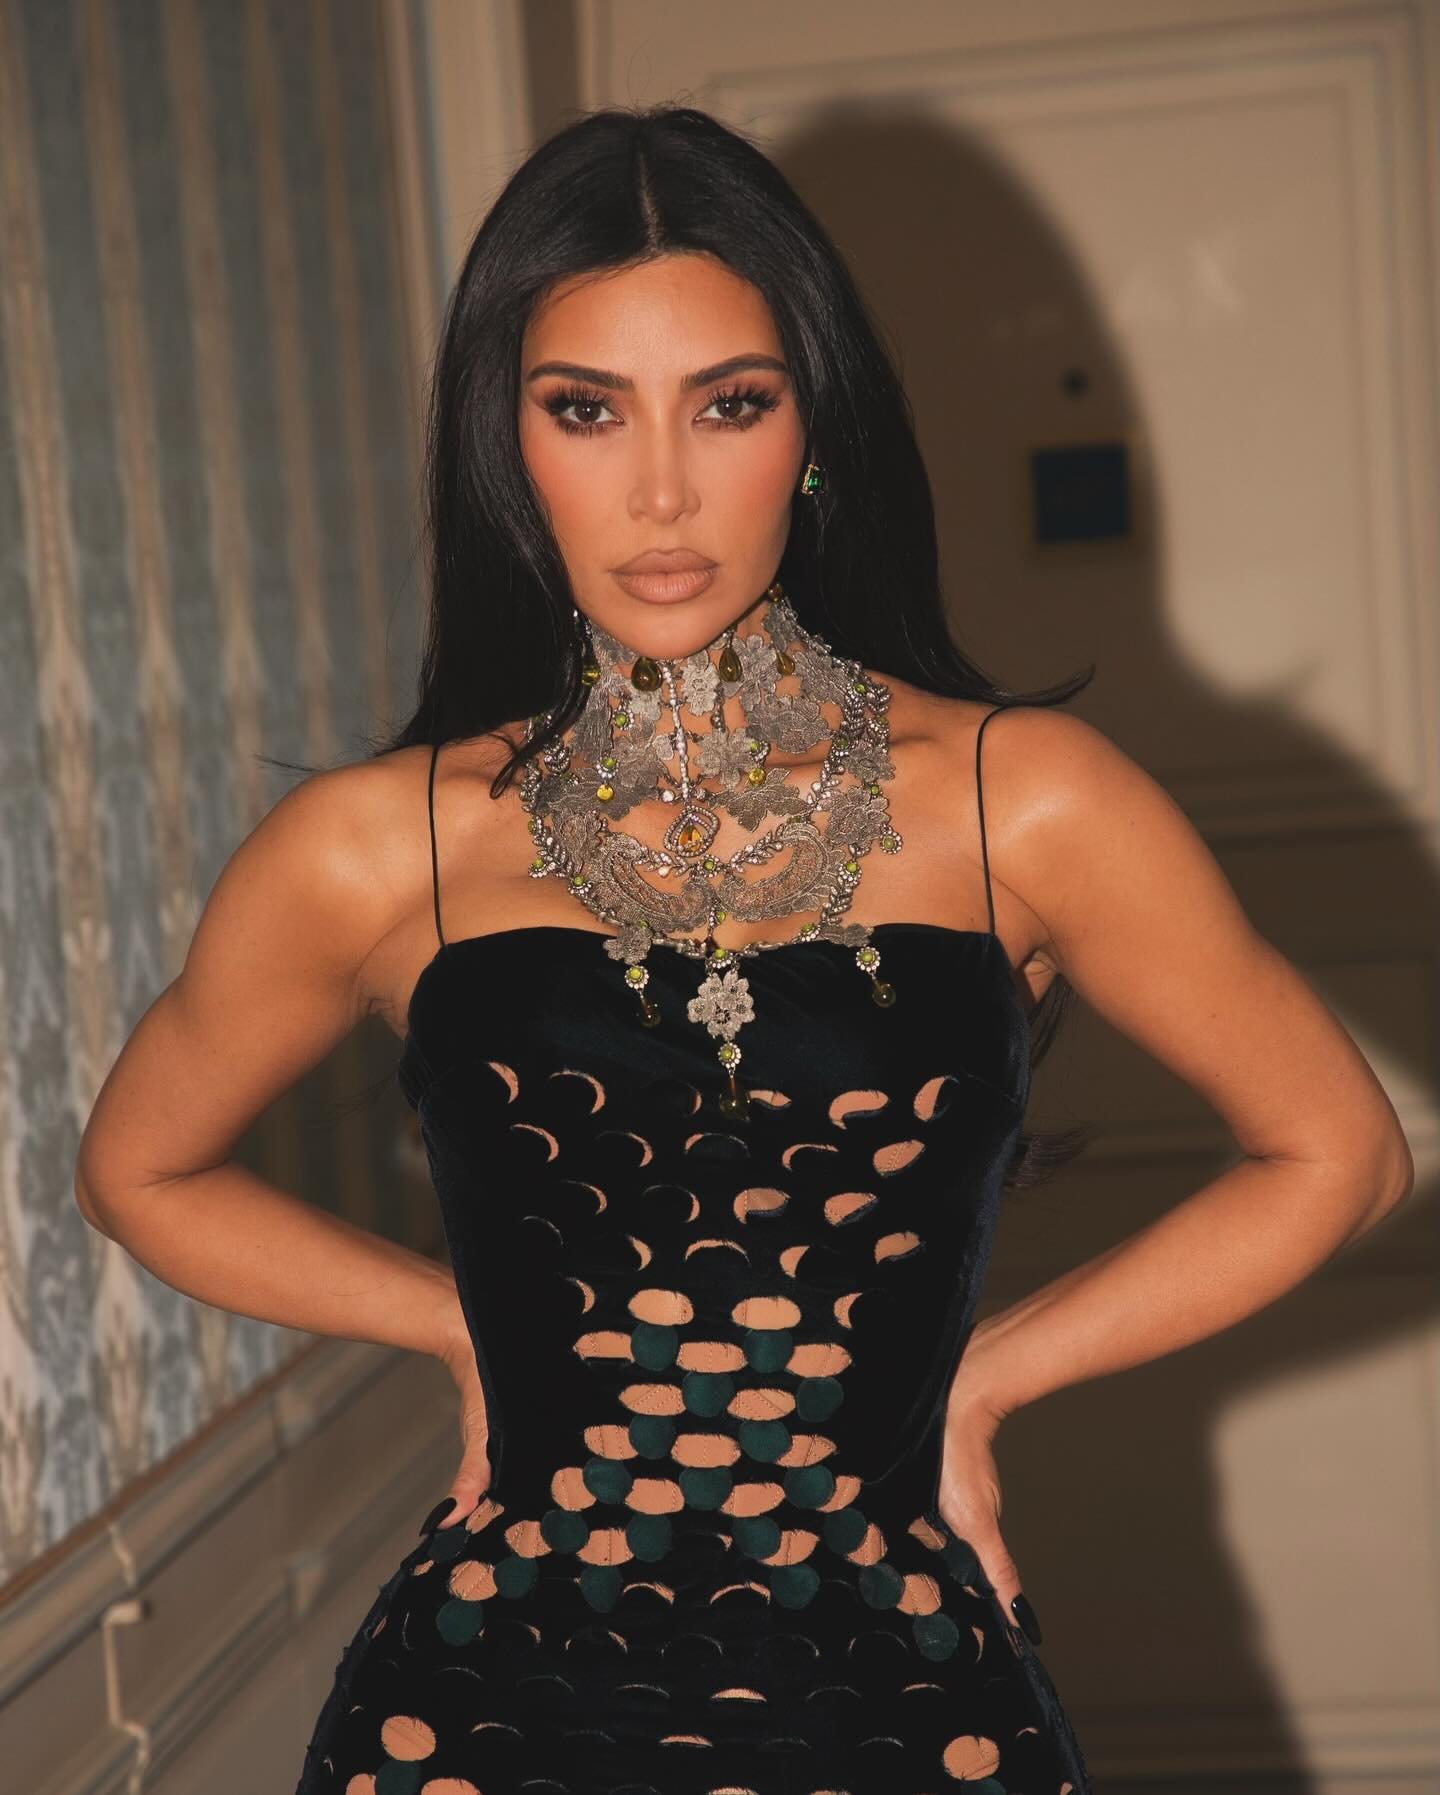 What Kim Kardashian do for the living?